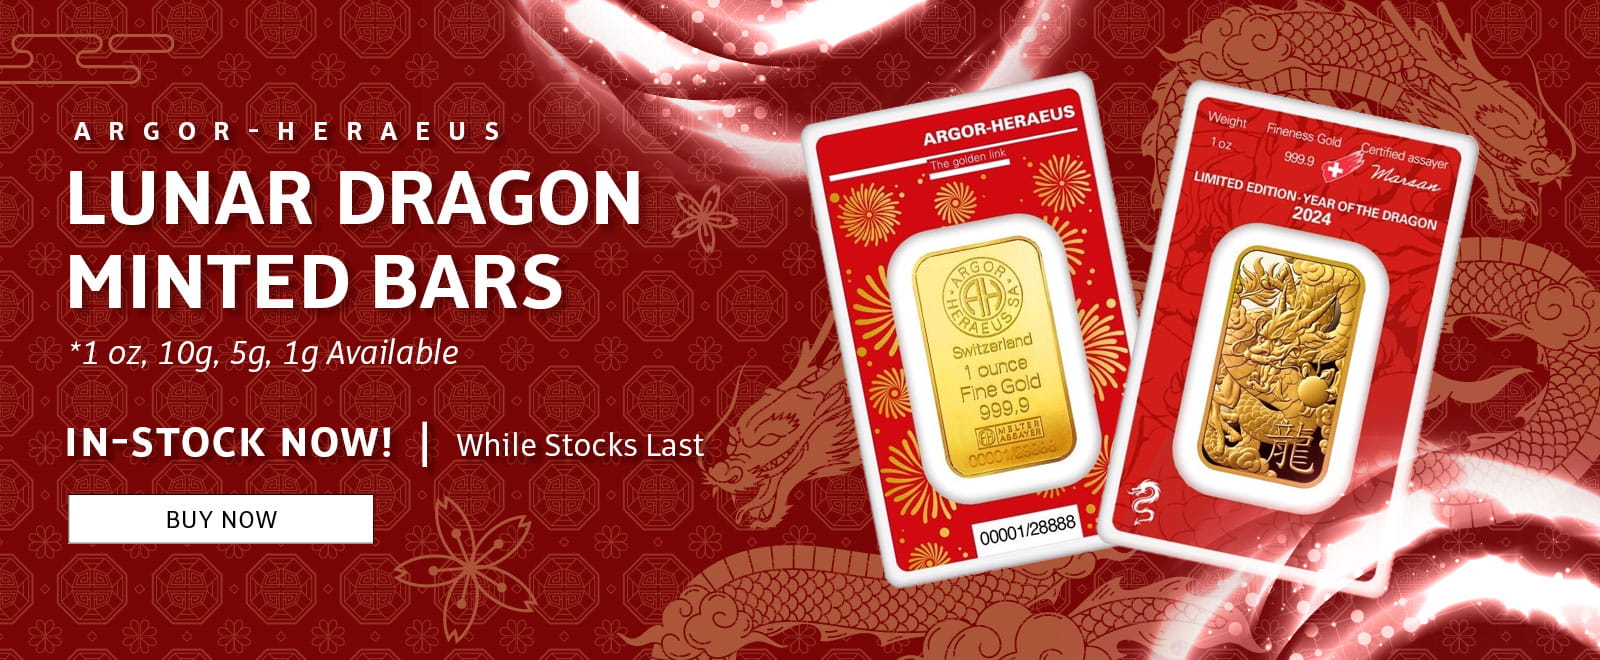 Argor-Heraeus Gold Minted Lunar Dragon bars, available in various formats - 1 oz, 10 grams, 5 grams and 1 gram